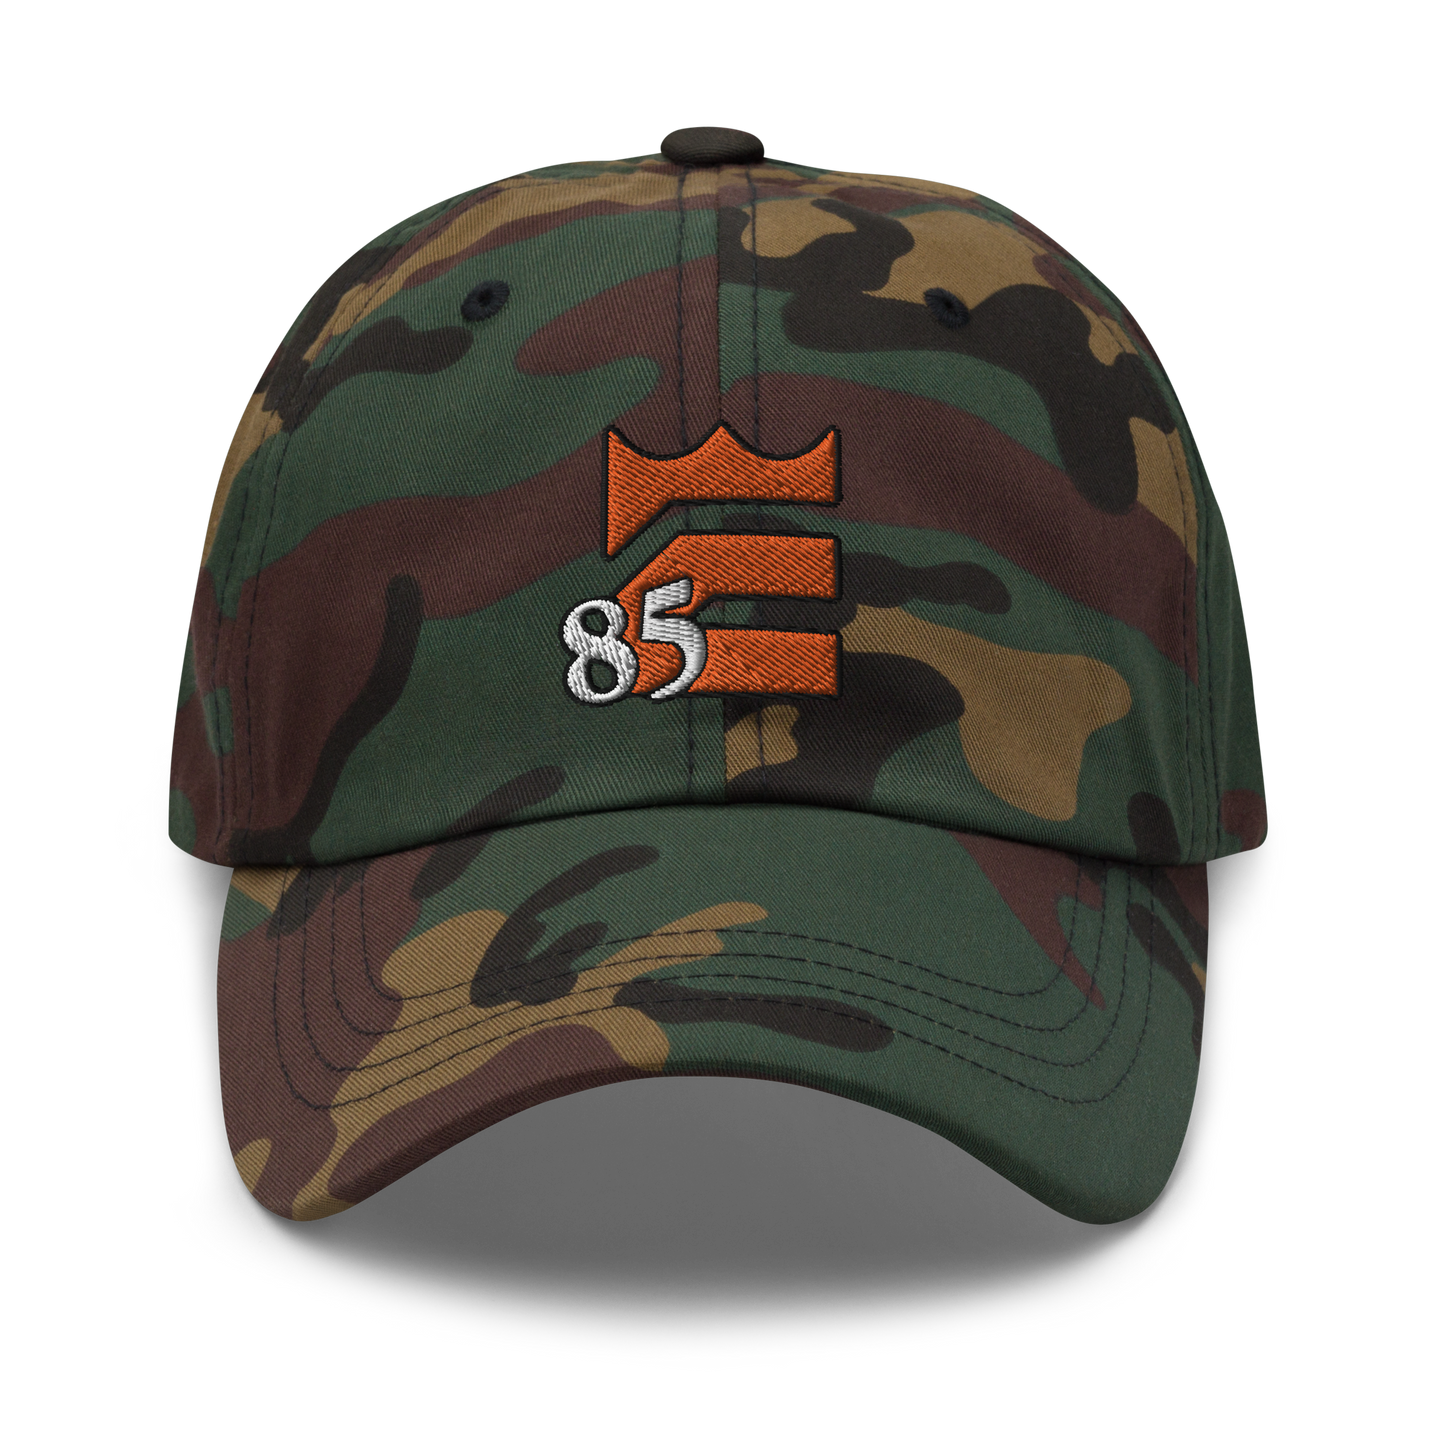 E85 PERFORMANCE CAP